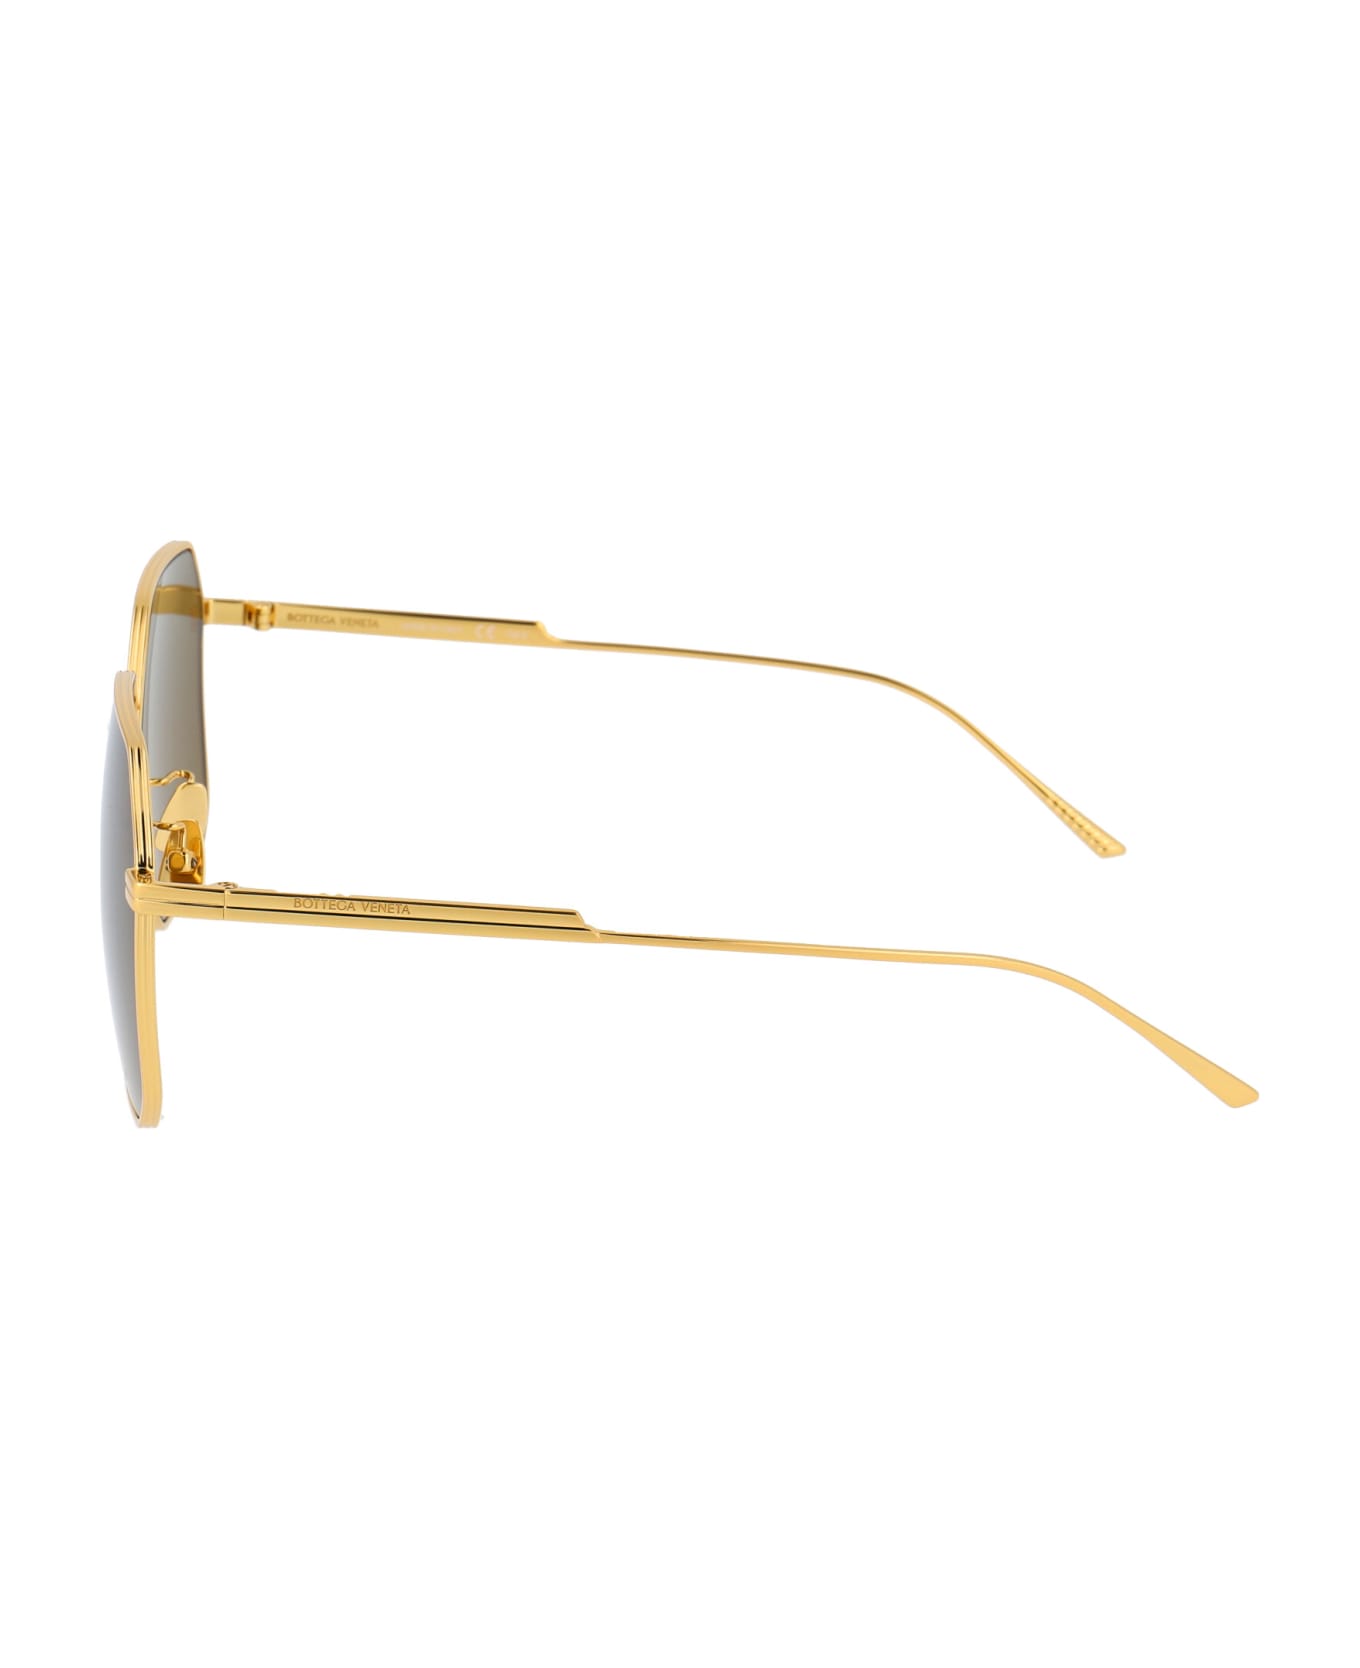 Bottega Veneta Eyewear Bv1108sa Sunglasses - 002 GOLD GOLD BROWN